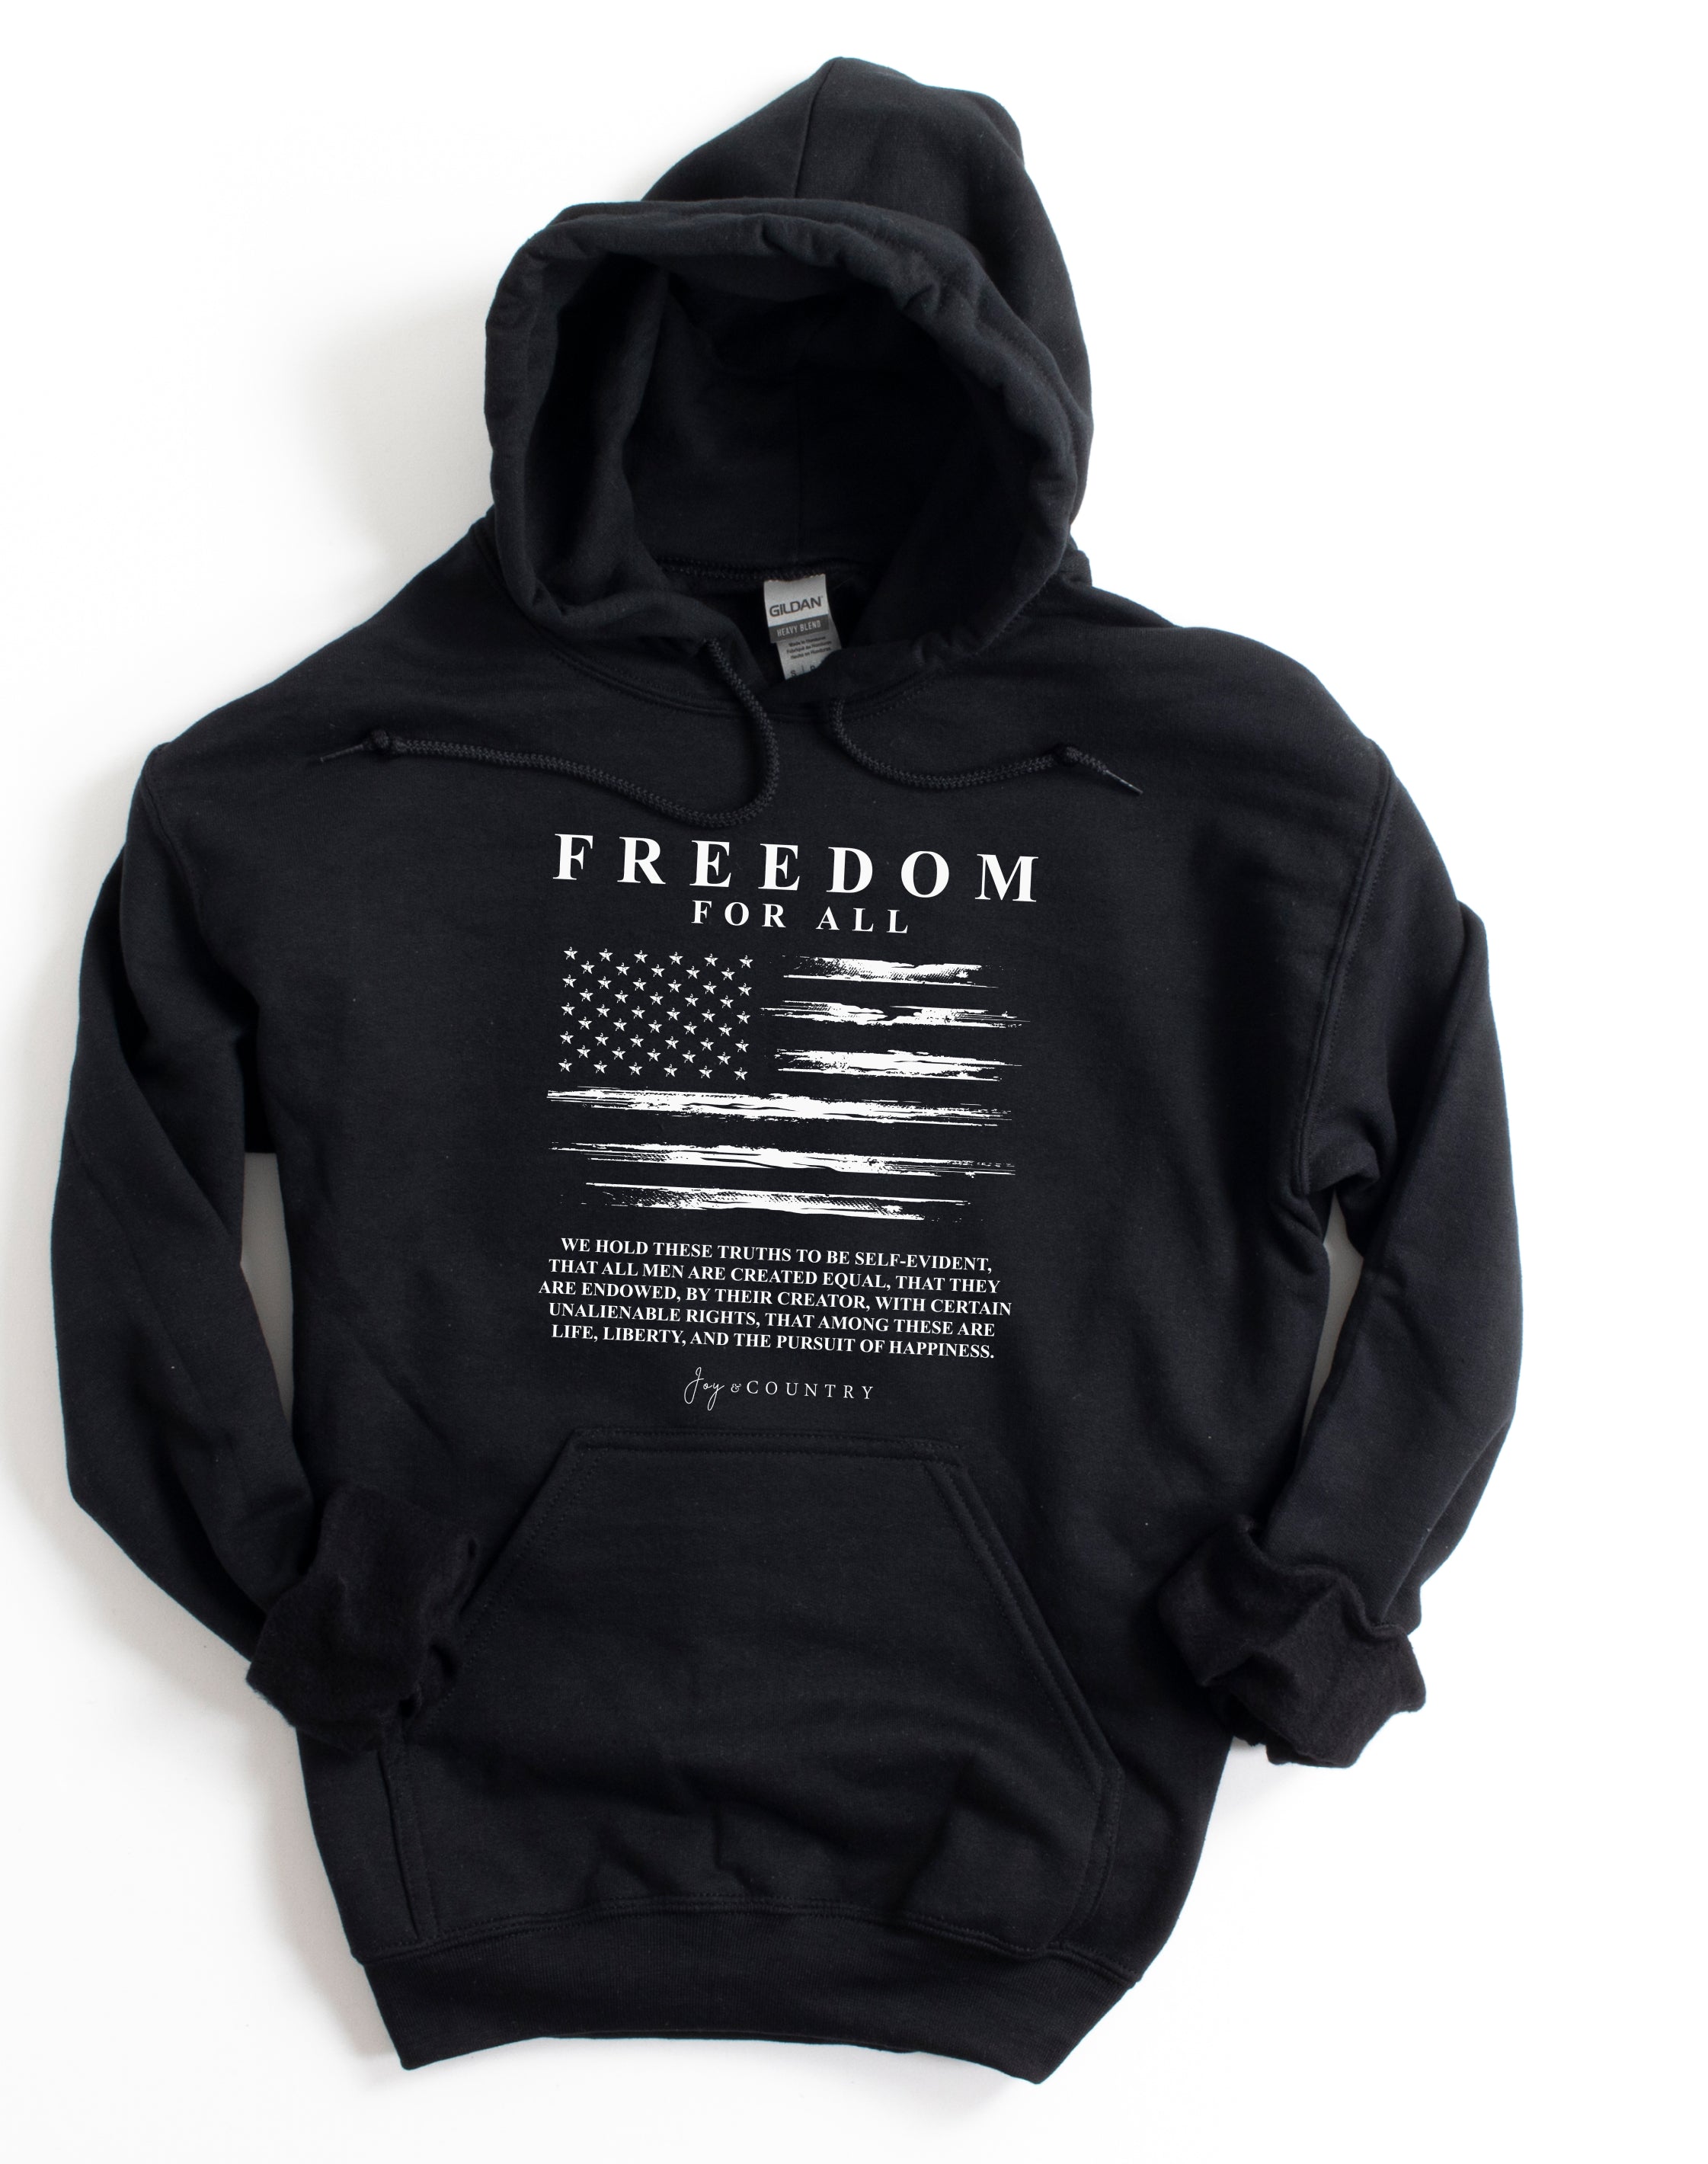 Freedom for All - Unisex Hoodie Sweatshirt – Joy & Country